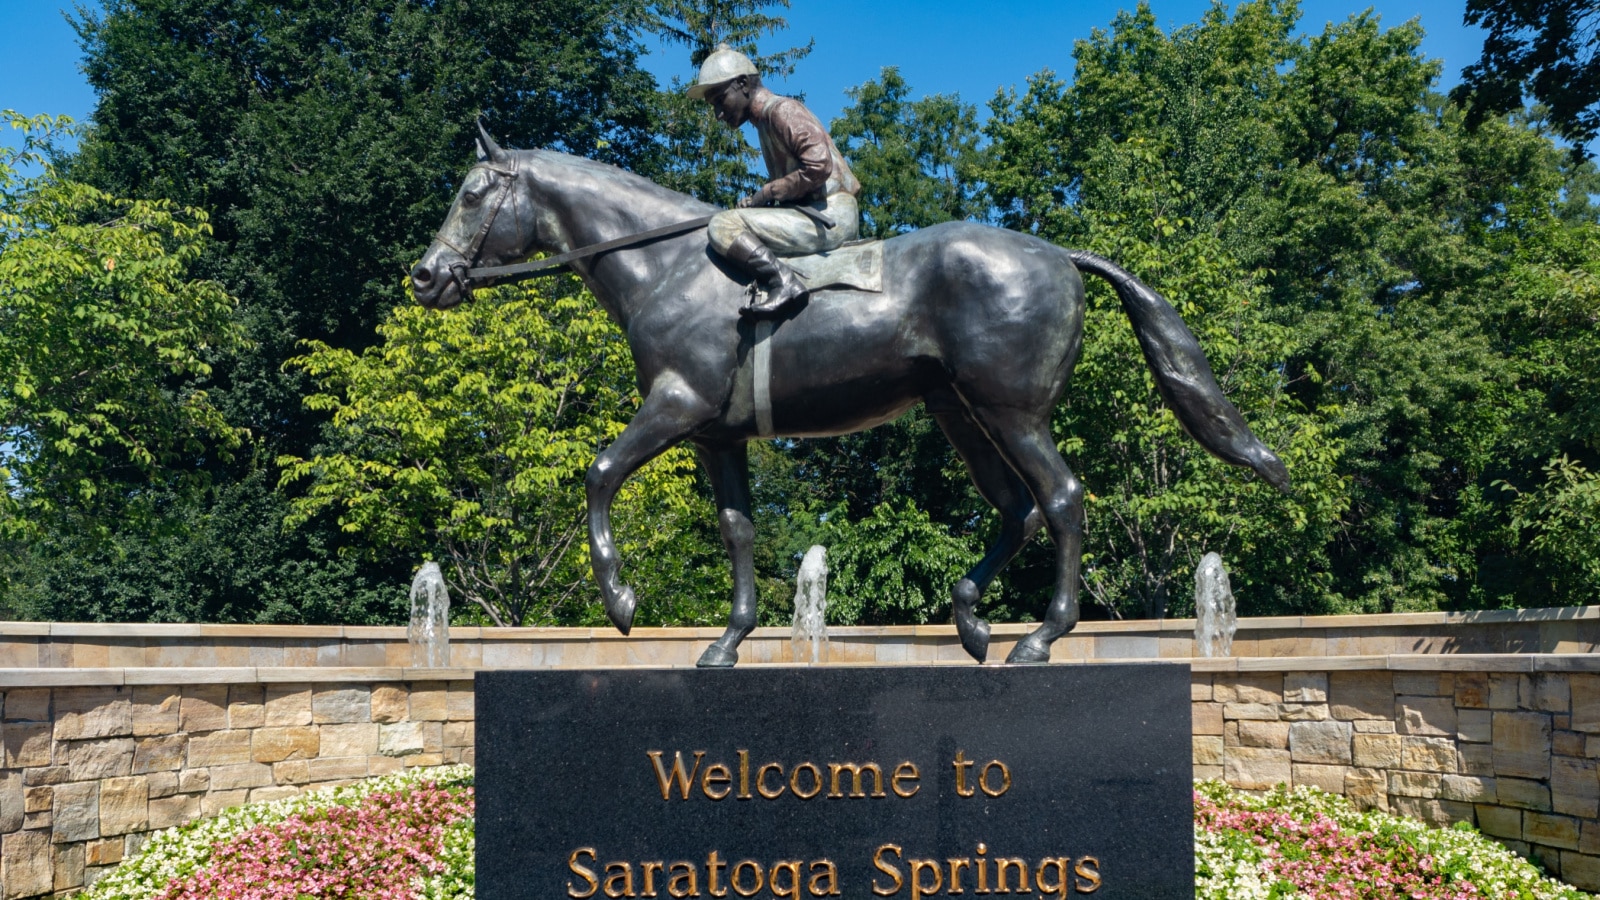 Saratoga Springs, NY, USA - July 29, 2020: "Welcome To Saratoga Springs" statue of jockey riding horse.